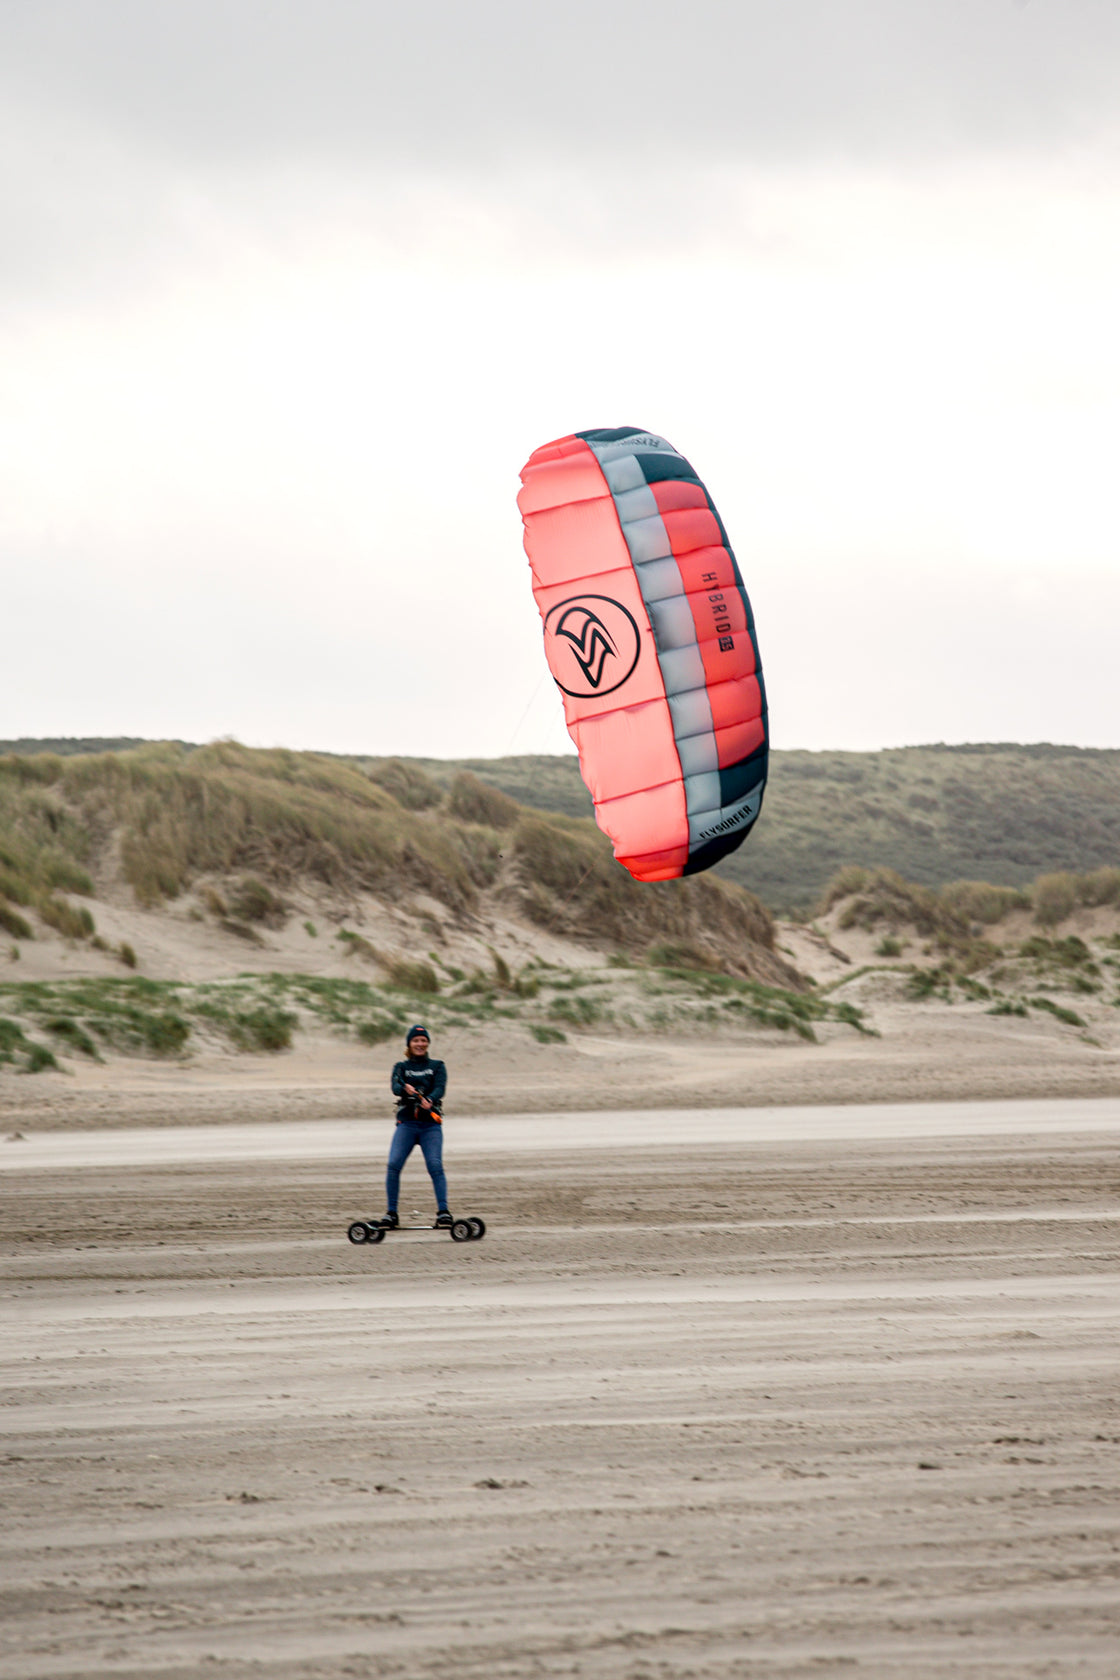 Flysurfer Hybrid Kitesurfing Kite Sand